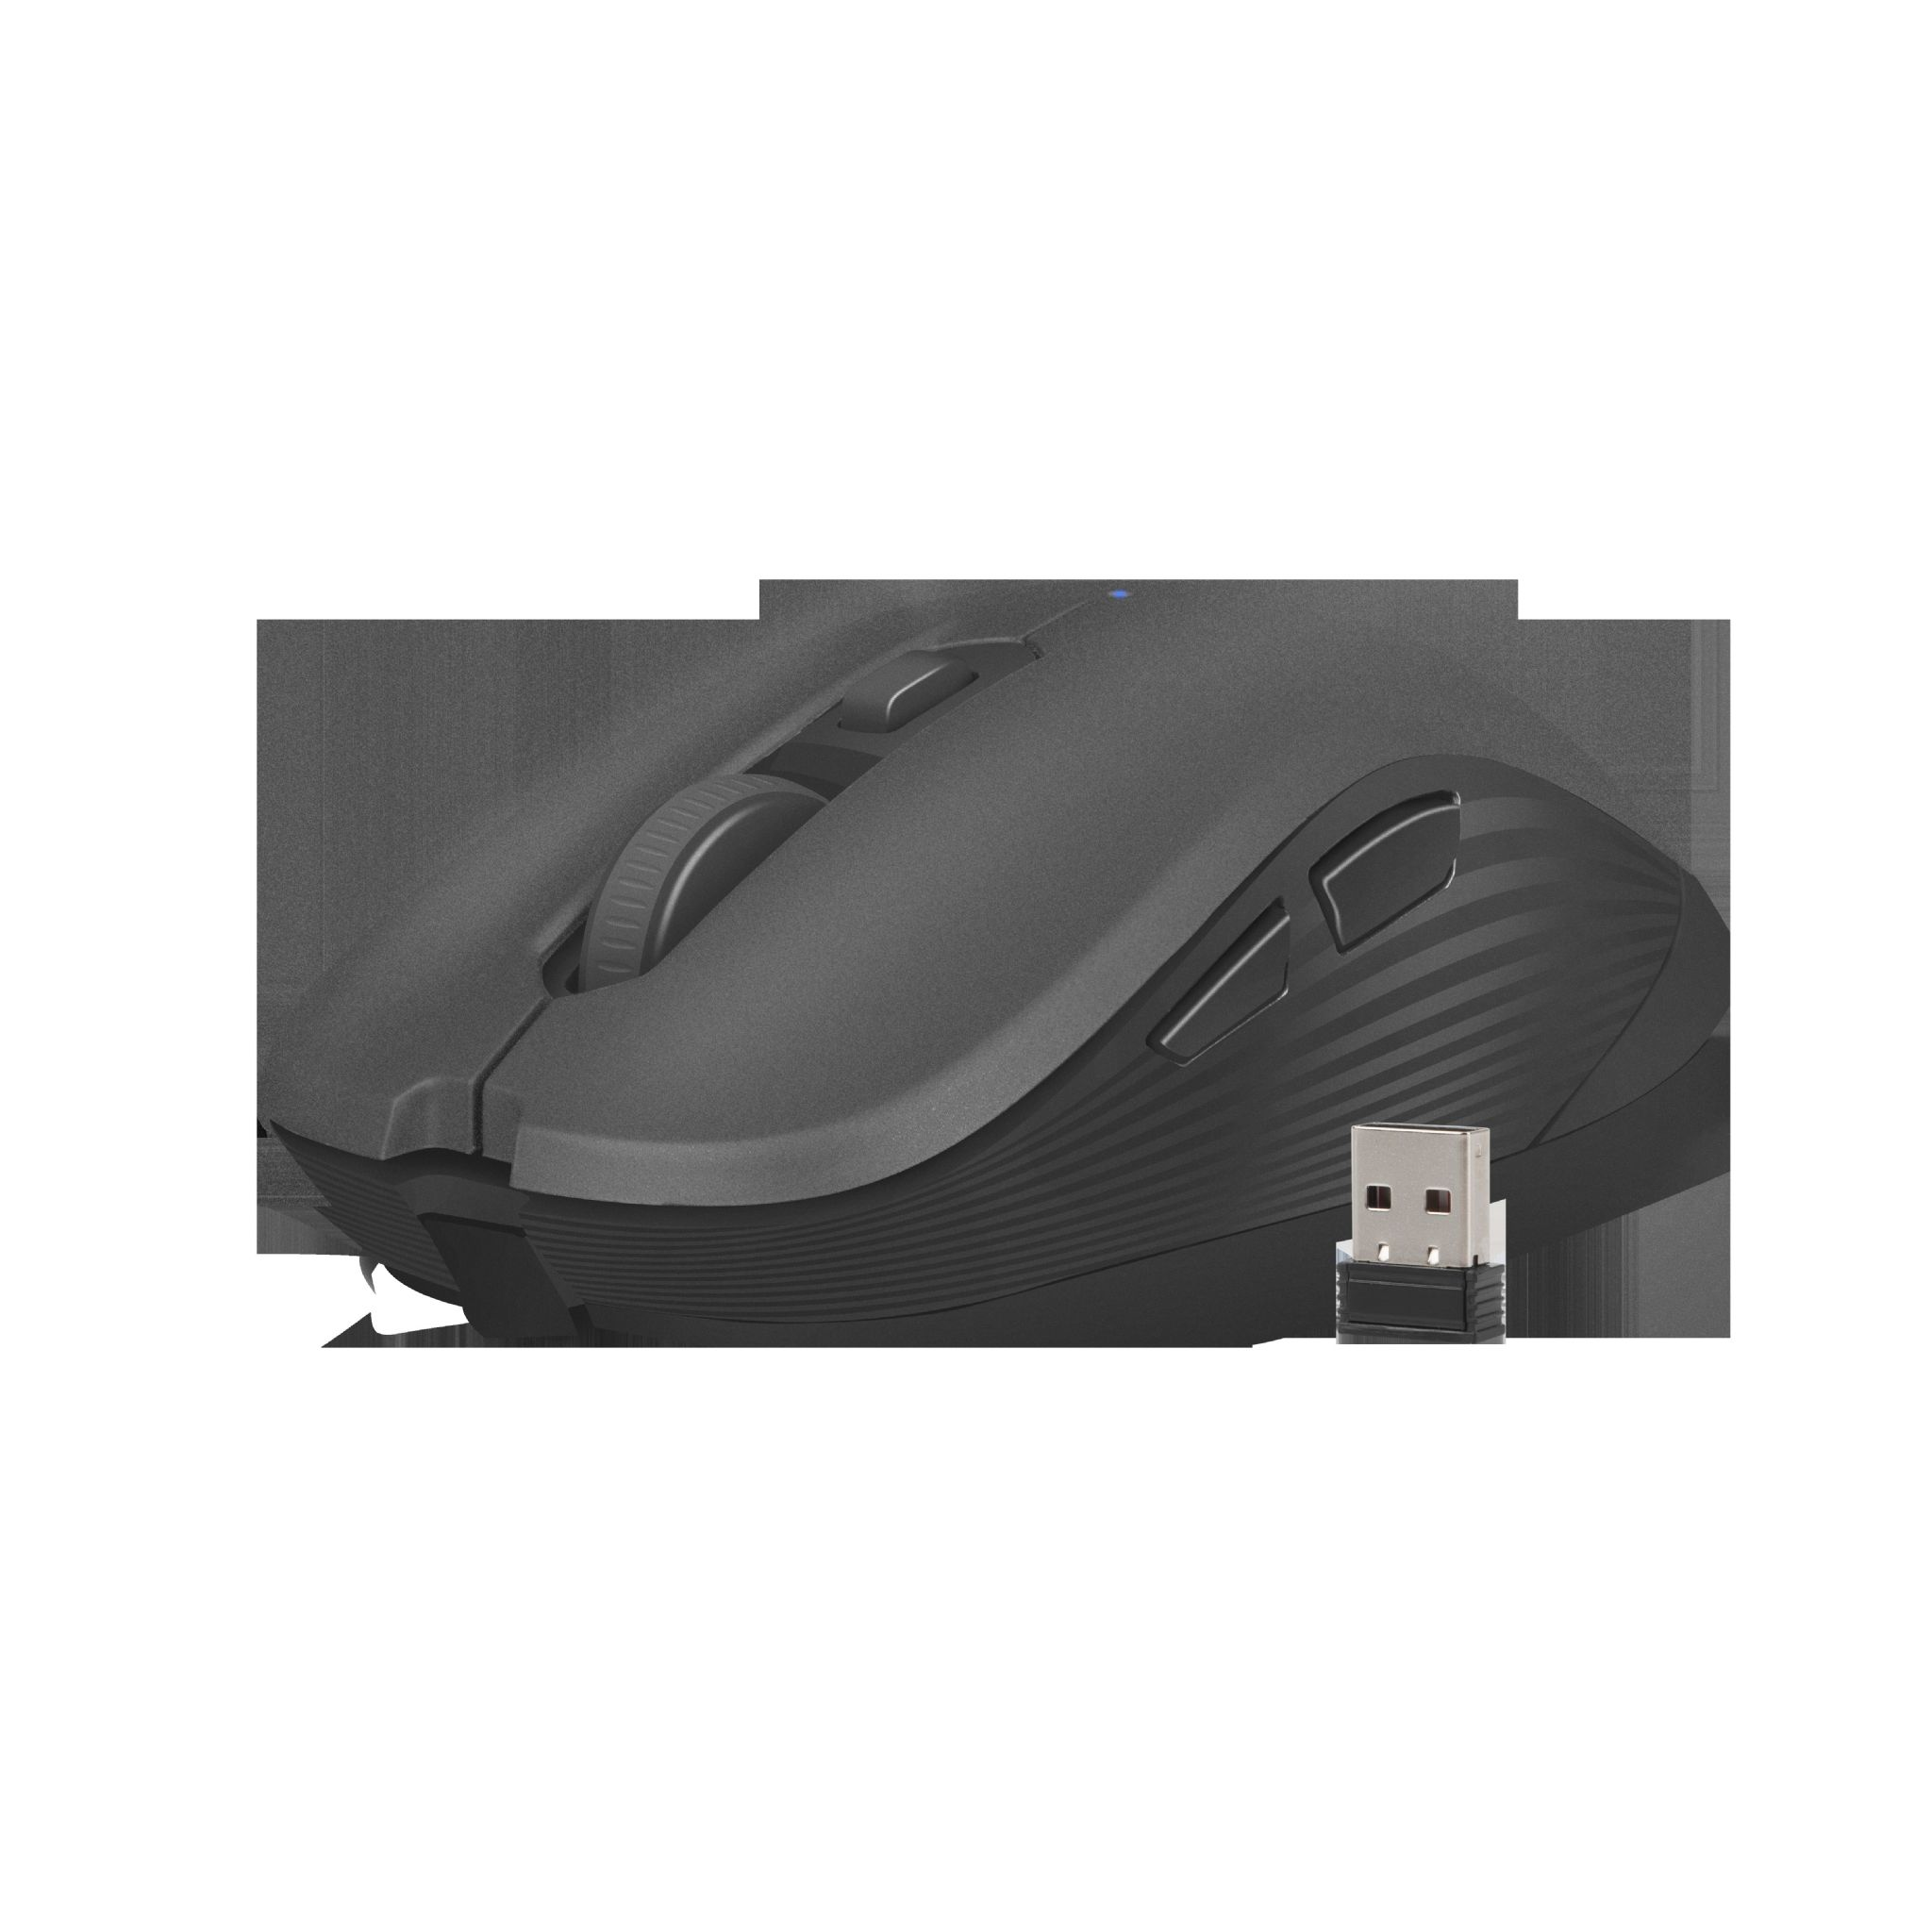 Maus NATEC Kabellose DPI Robin Black Desktop-Set, 1600